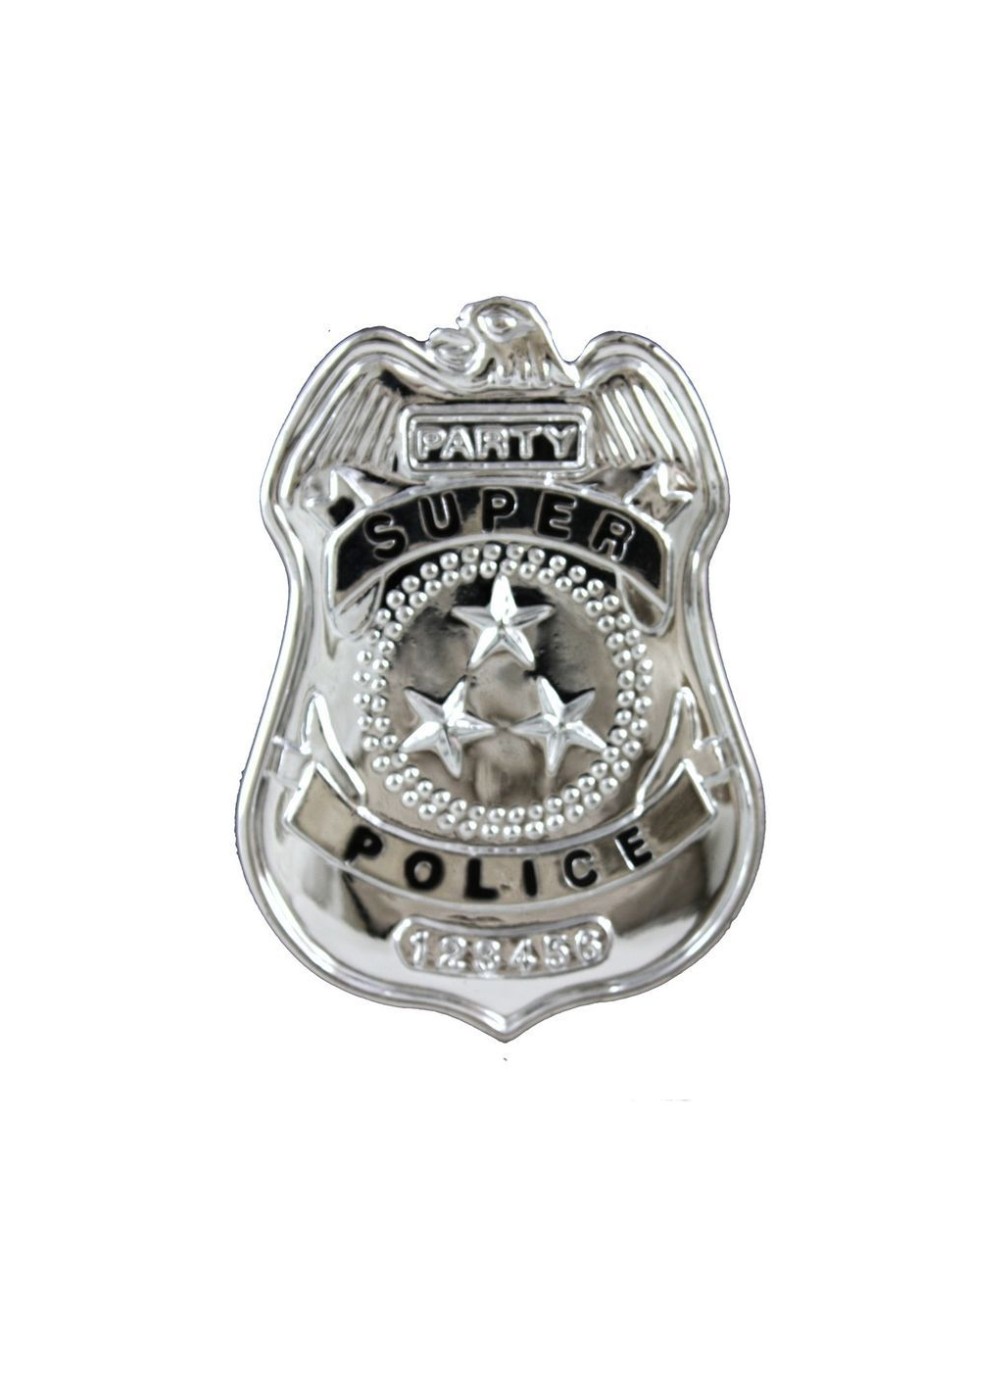 Police Boys Badge - Accessories